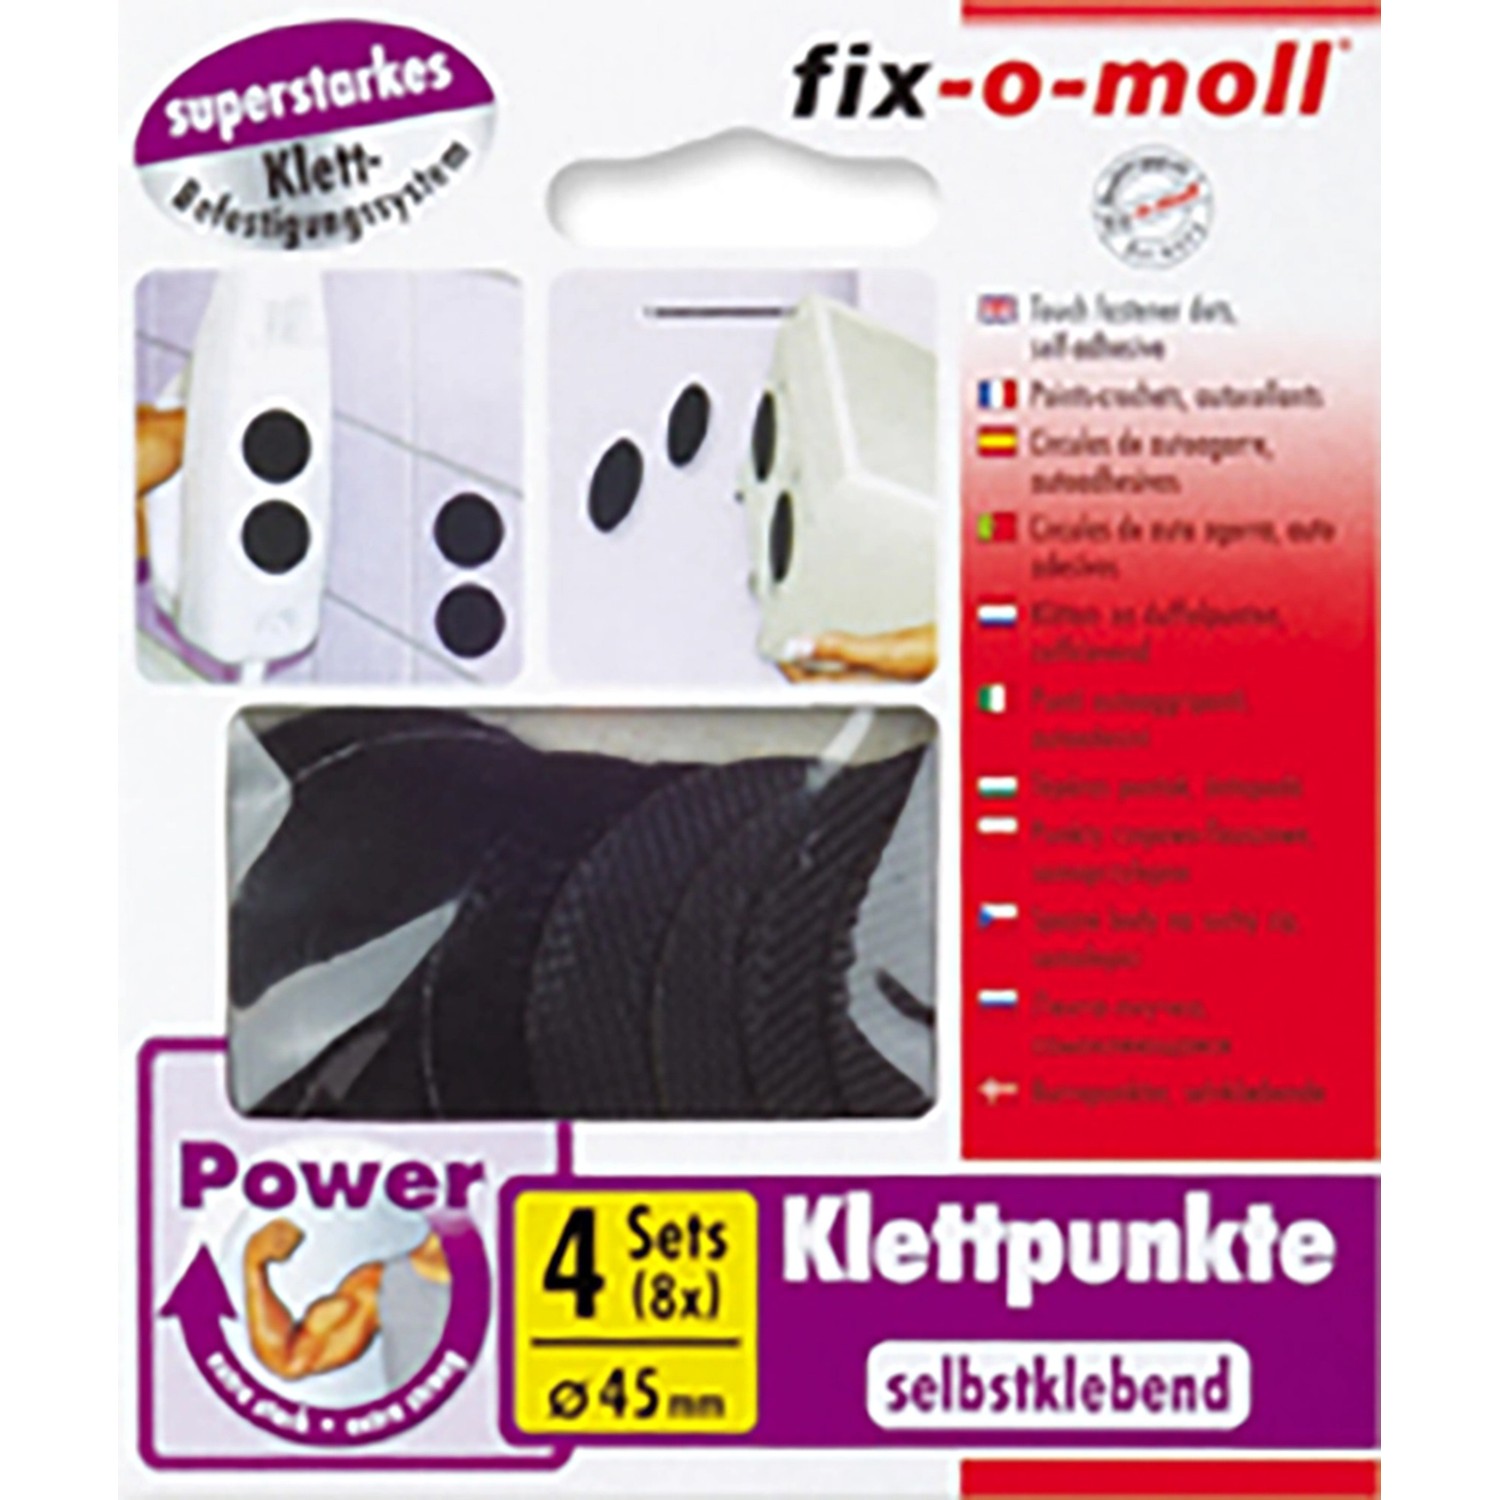 Fix-o-moll Power-Klettpunkte selbstklebend 4 Sets Schwarz 45 mm